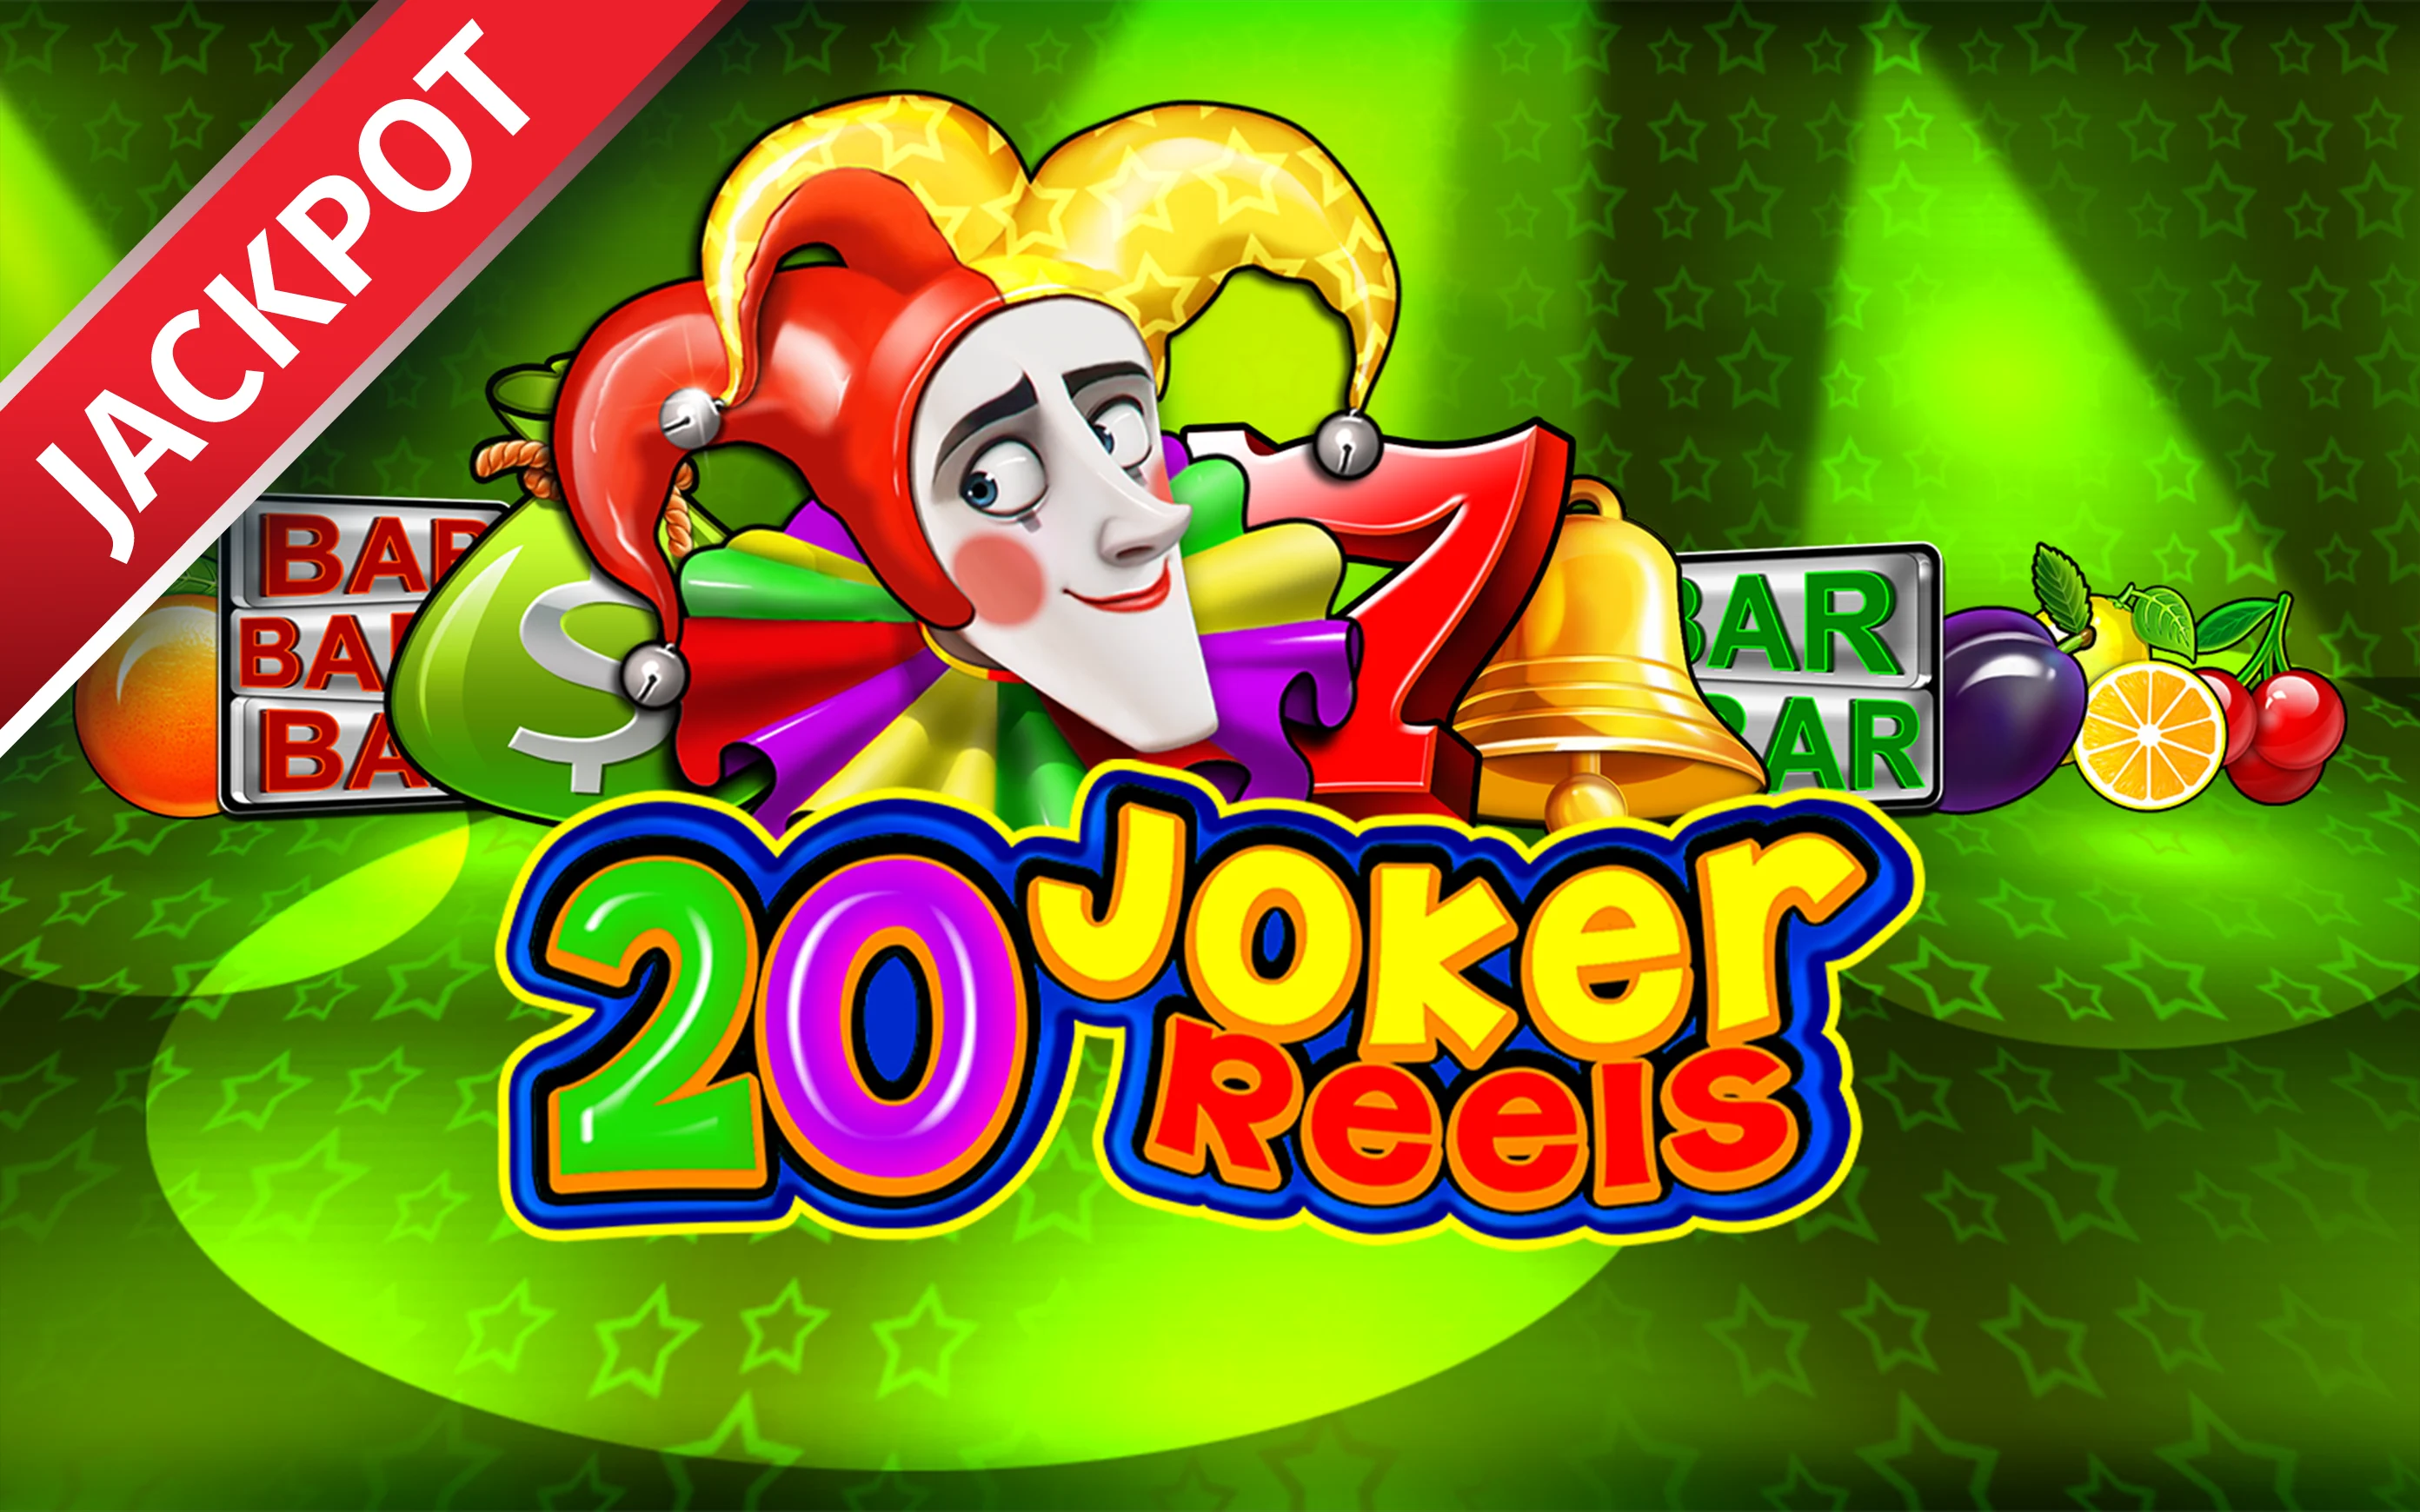 Juega a 20 Joker Reels en el casino en línea de Starcasino.be